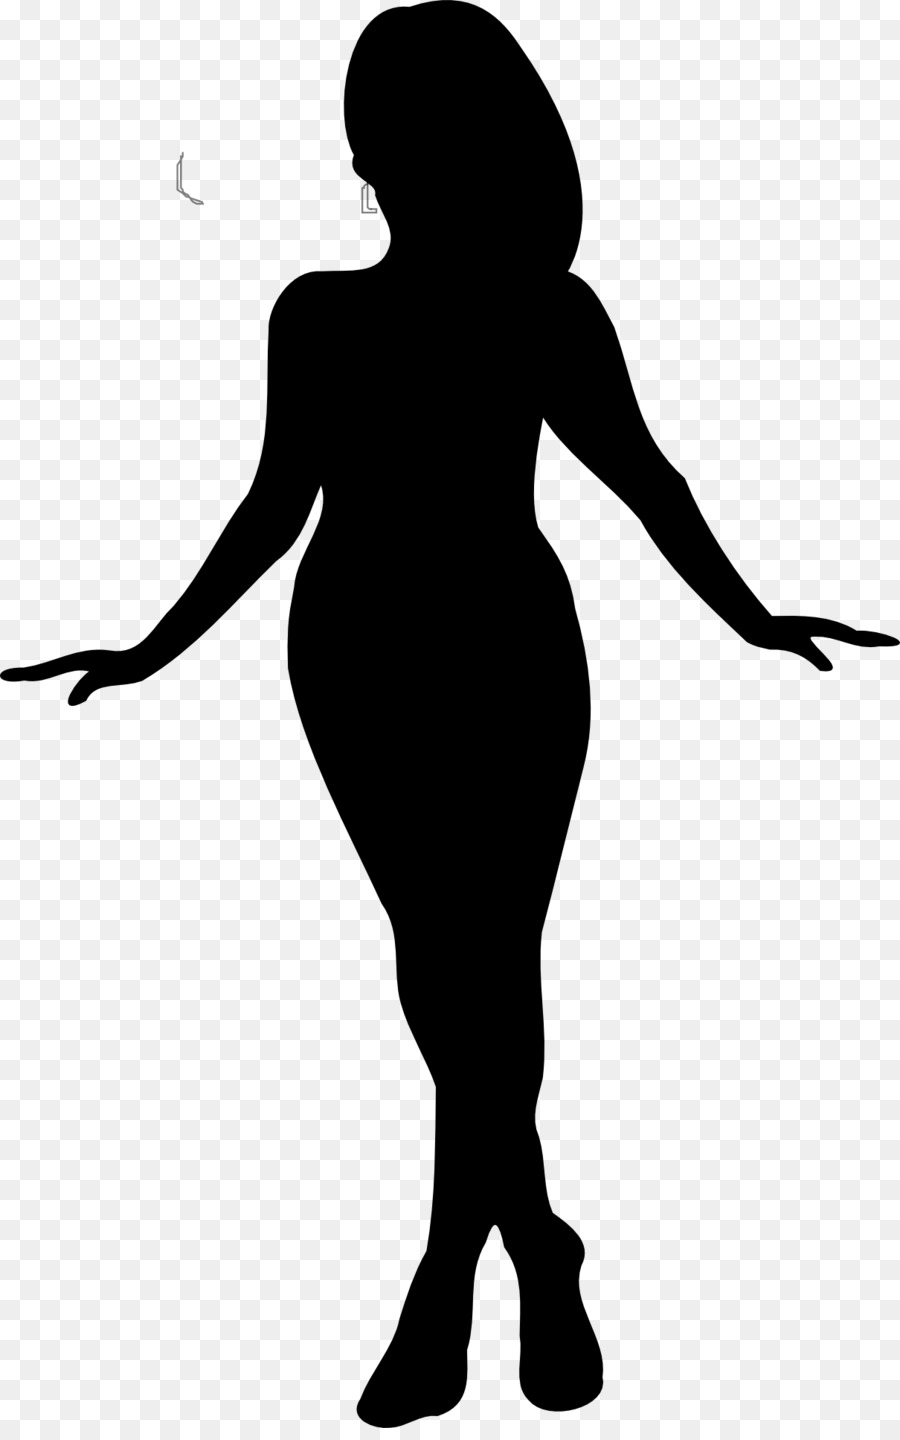 Silhouette Woman Clip art - woman silhouette png download - 1210*1920 - Free Transparent Silhouette png Download.